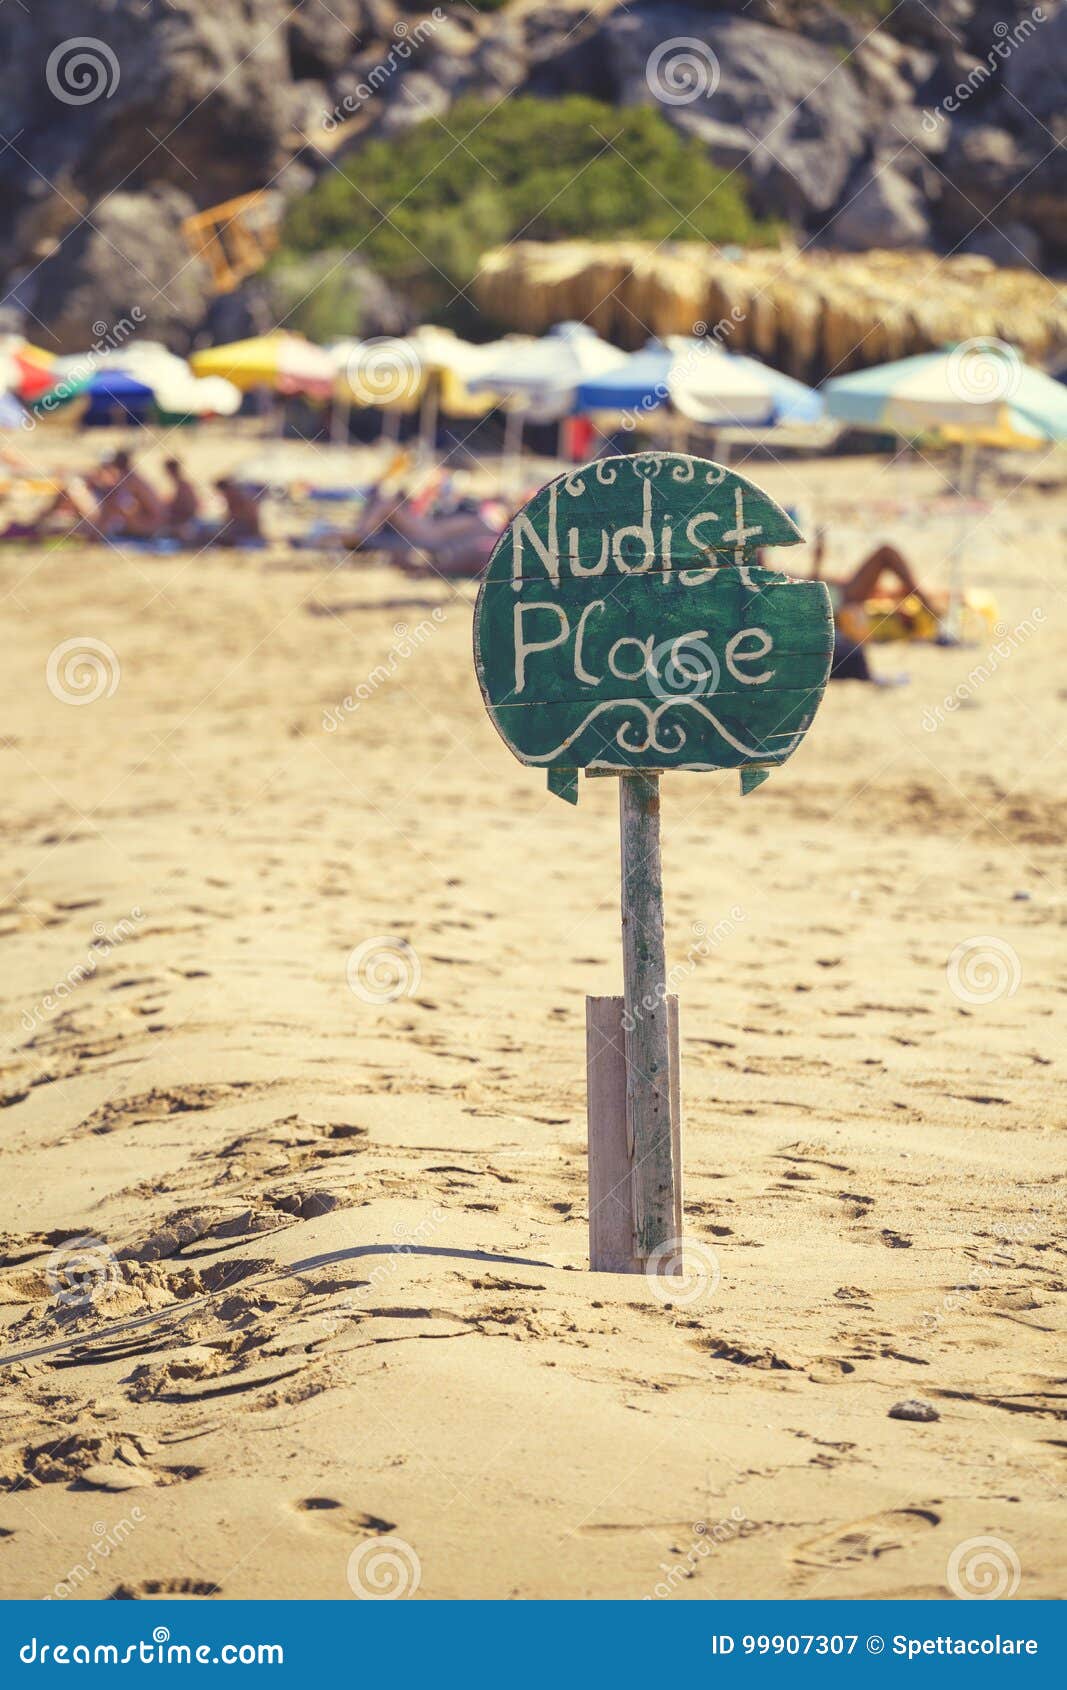 nude beach voyeur video